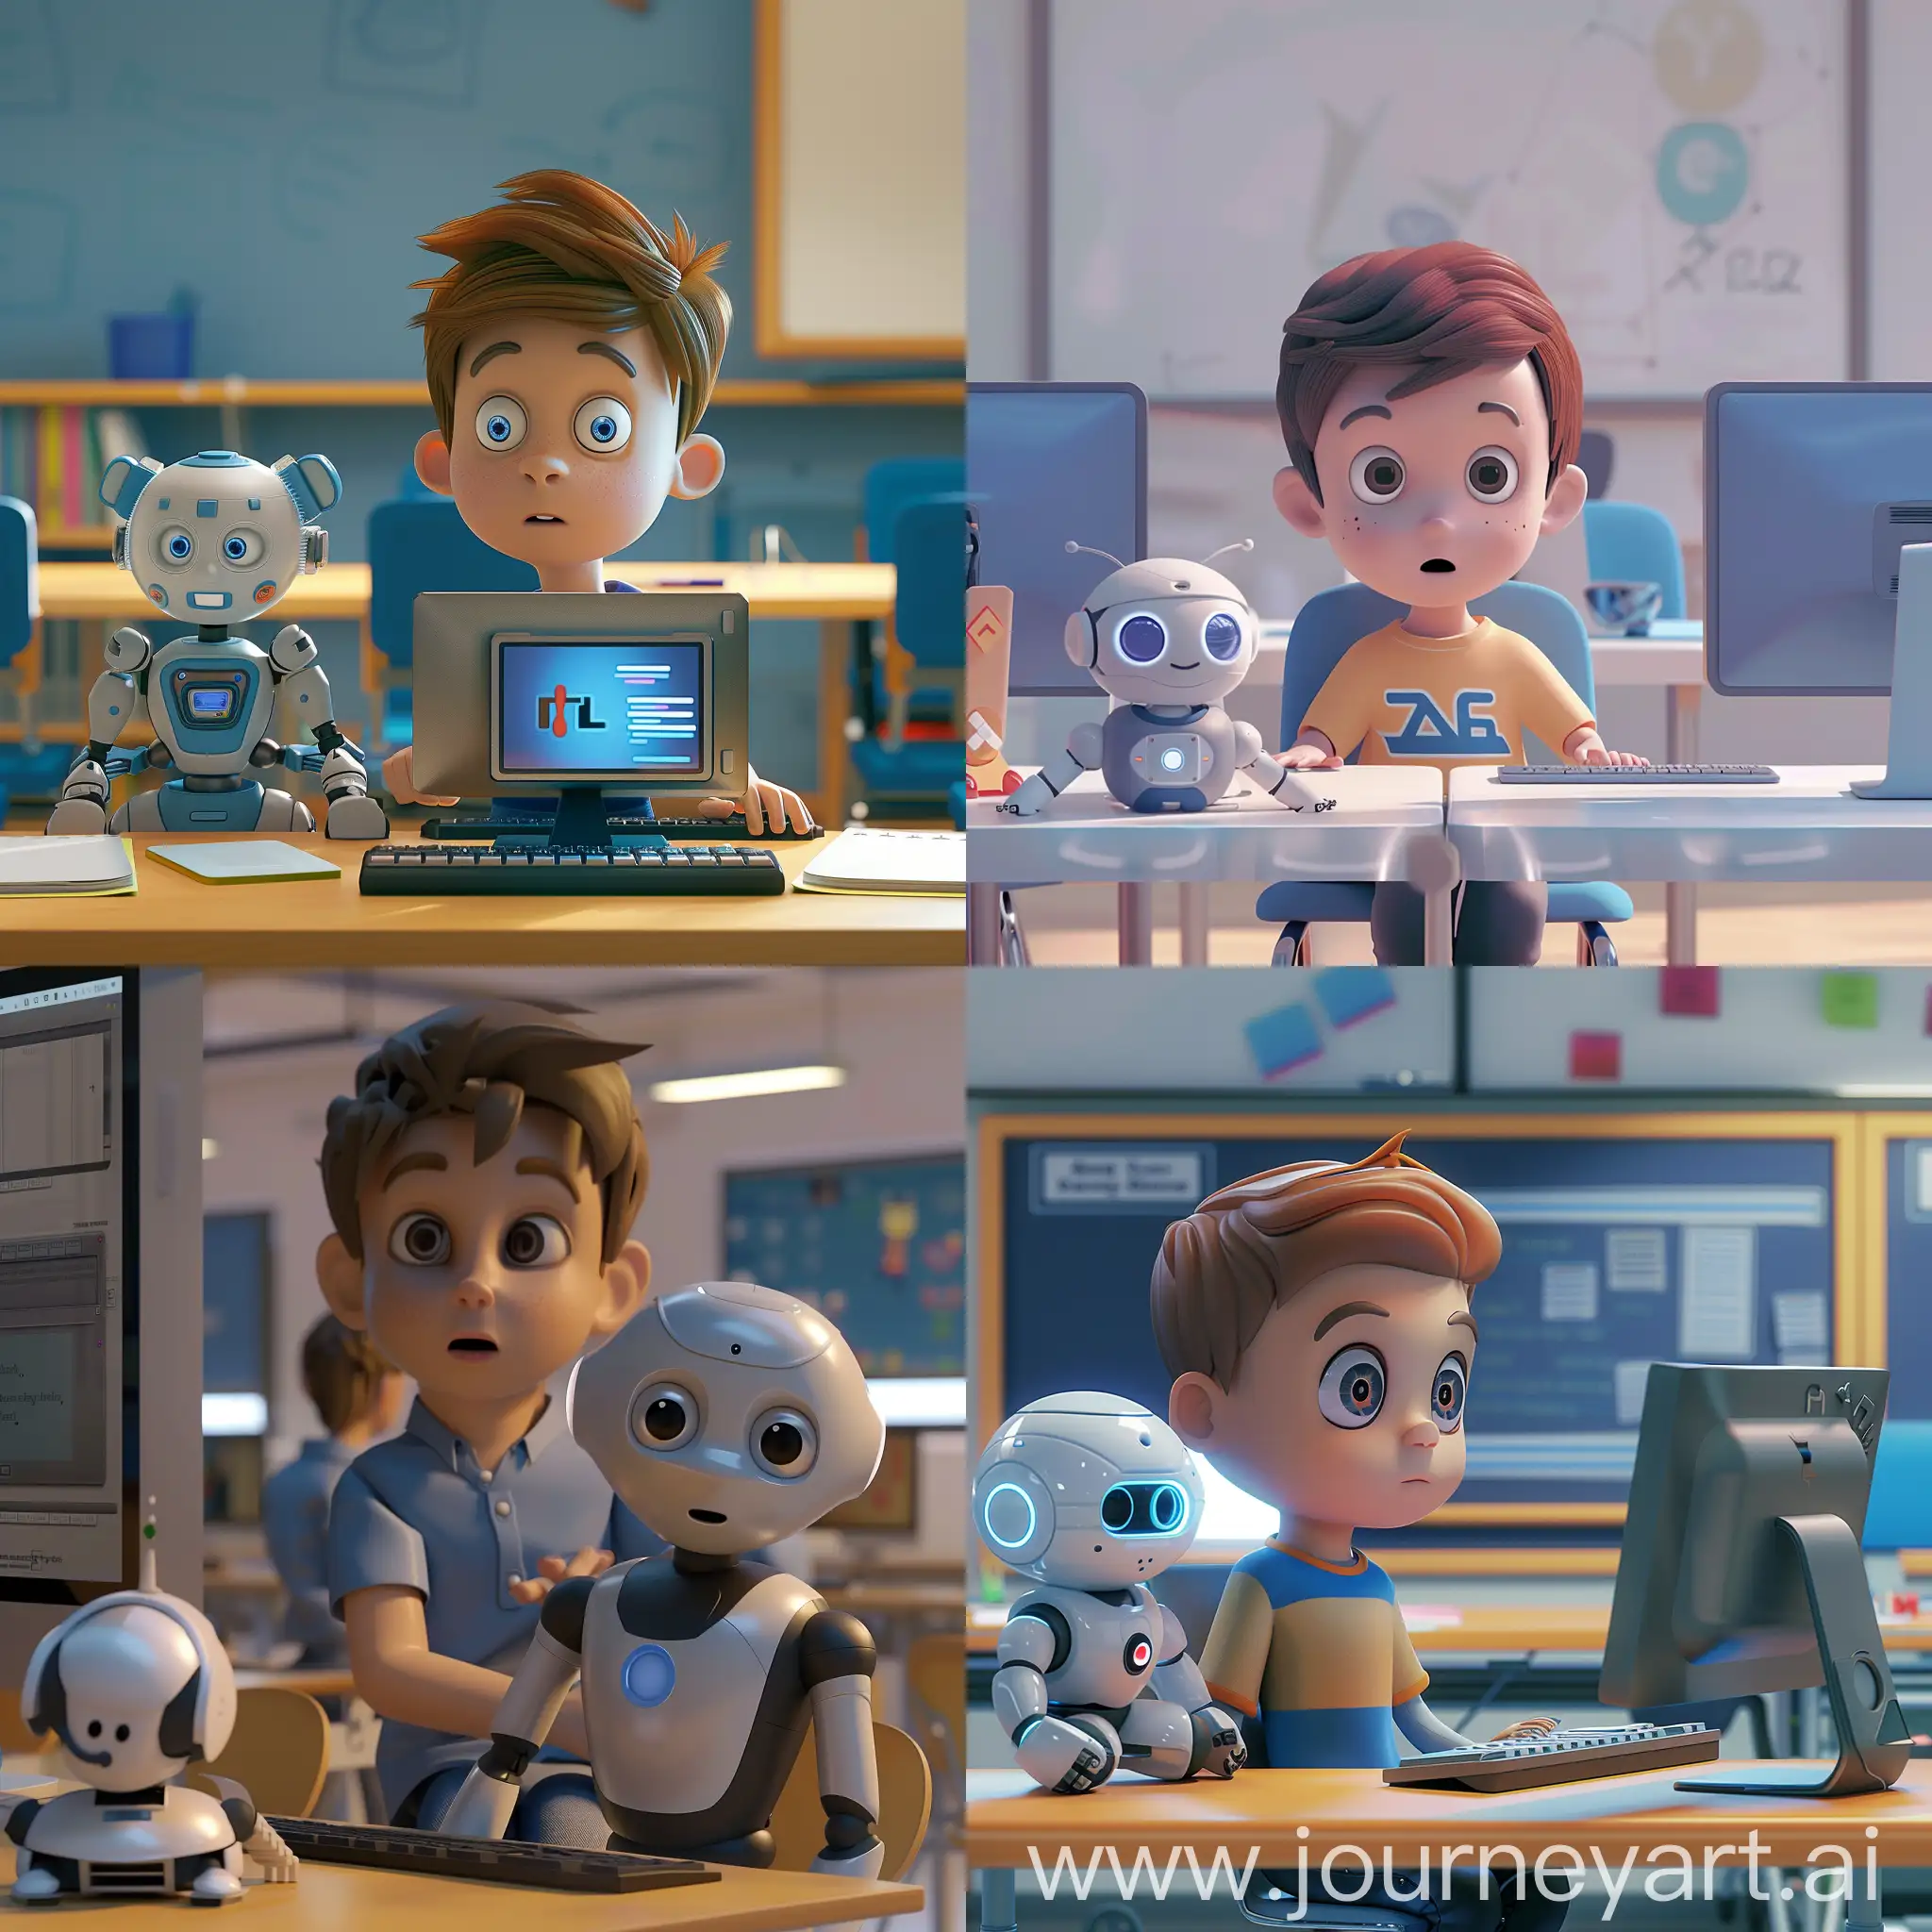 Educational-Technology-3D-Cartoon-Boy-Student-with-Robot-in-School-Class